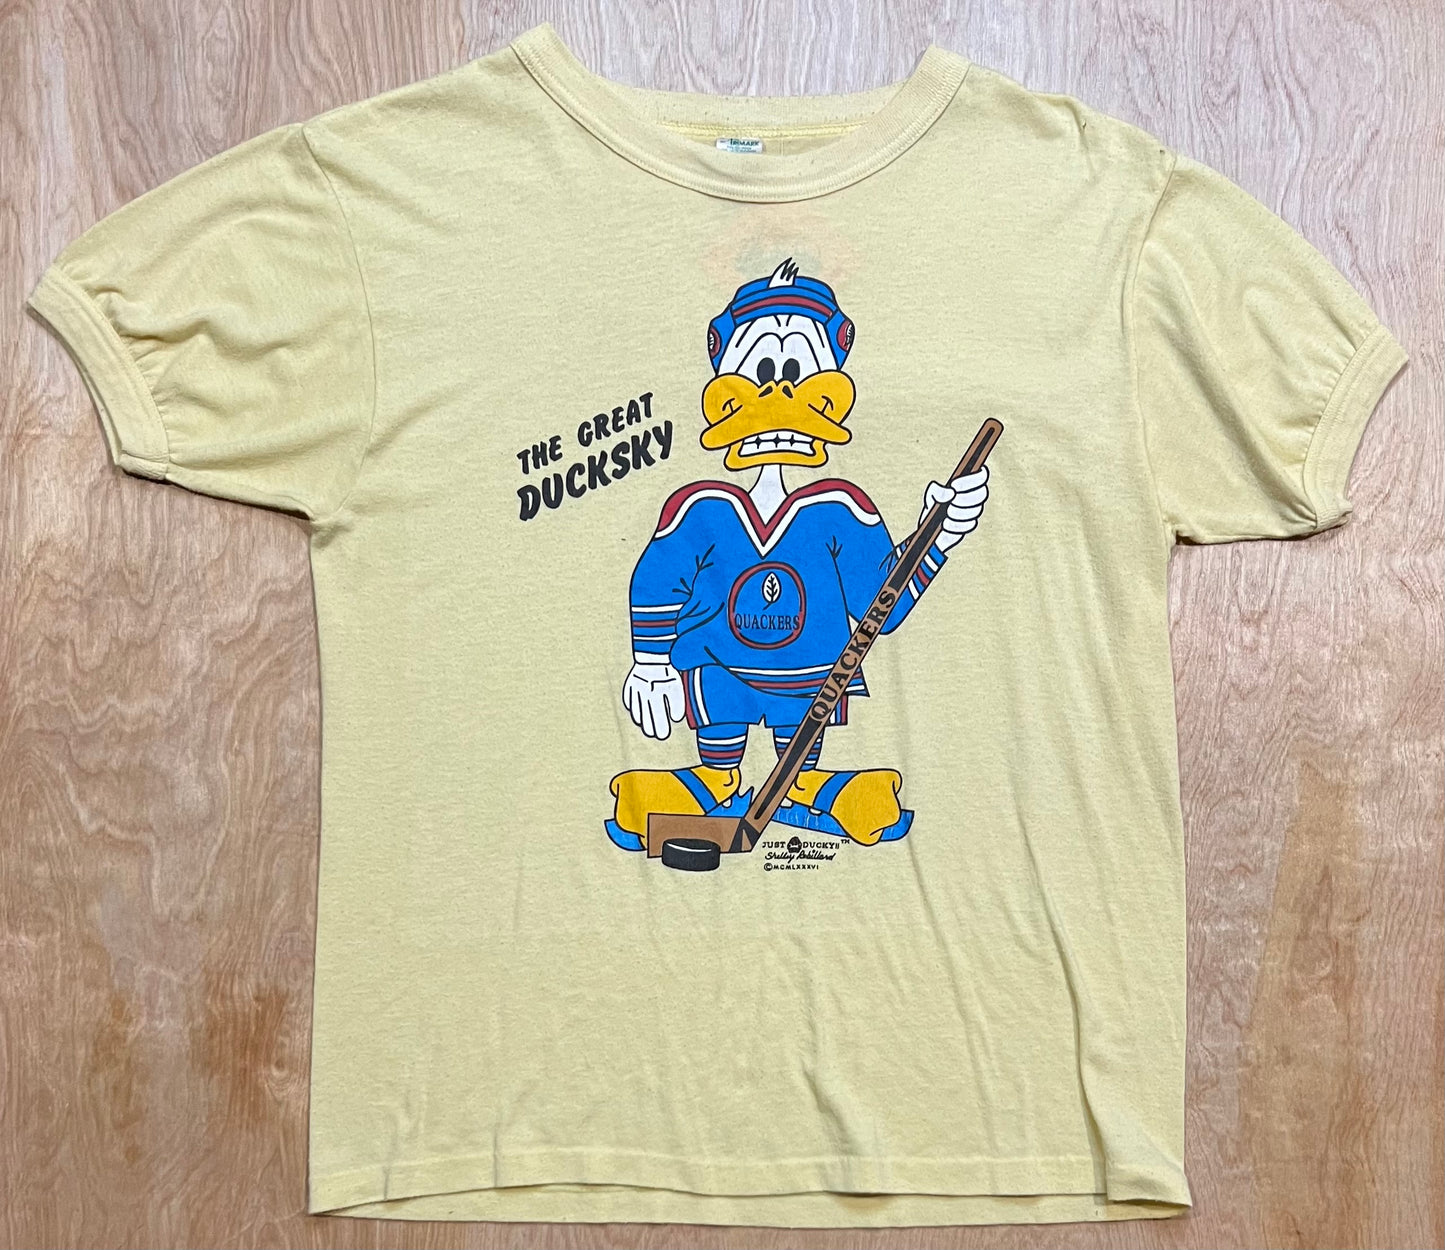 True Vintage "The Great Ducksky" T-Shirt